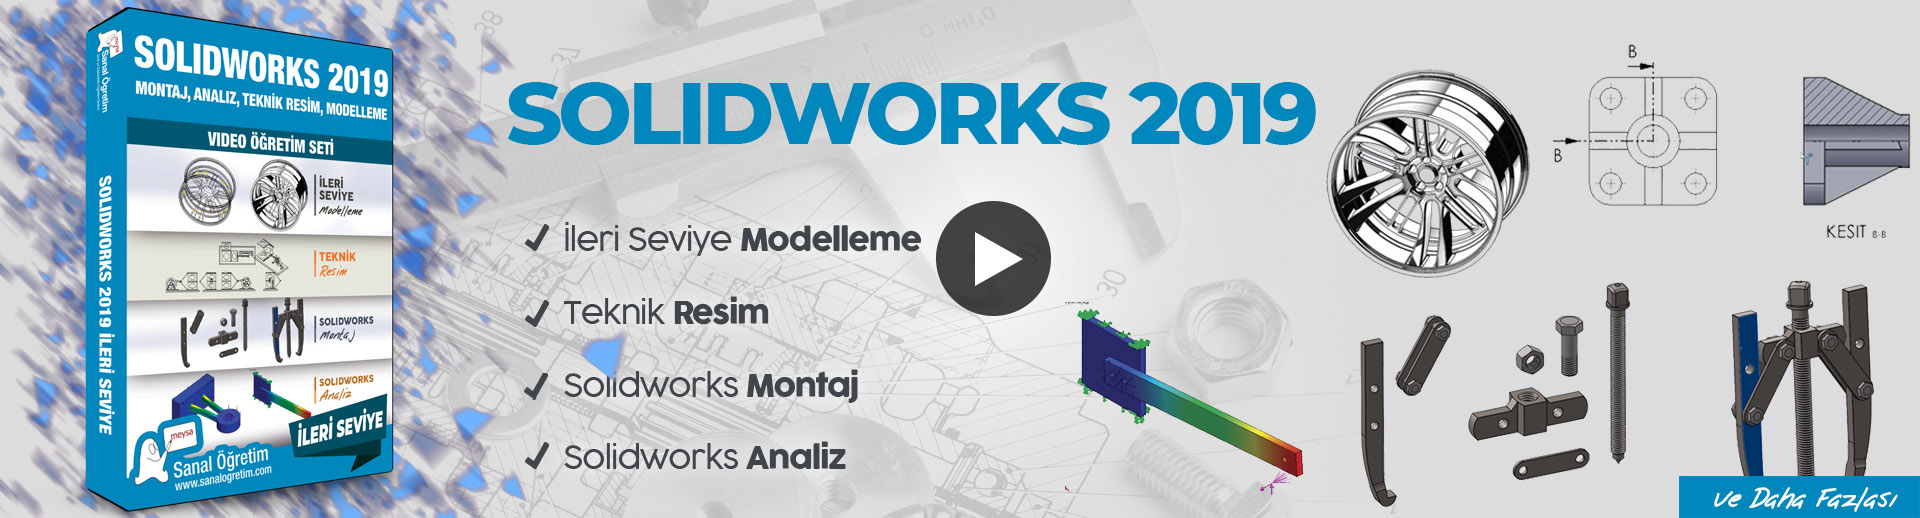 SolidWorks 2019 Montaj, Analiz, Teknik Resim, Modelleme